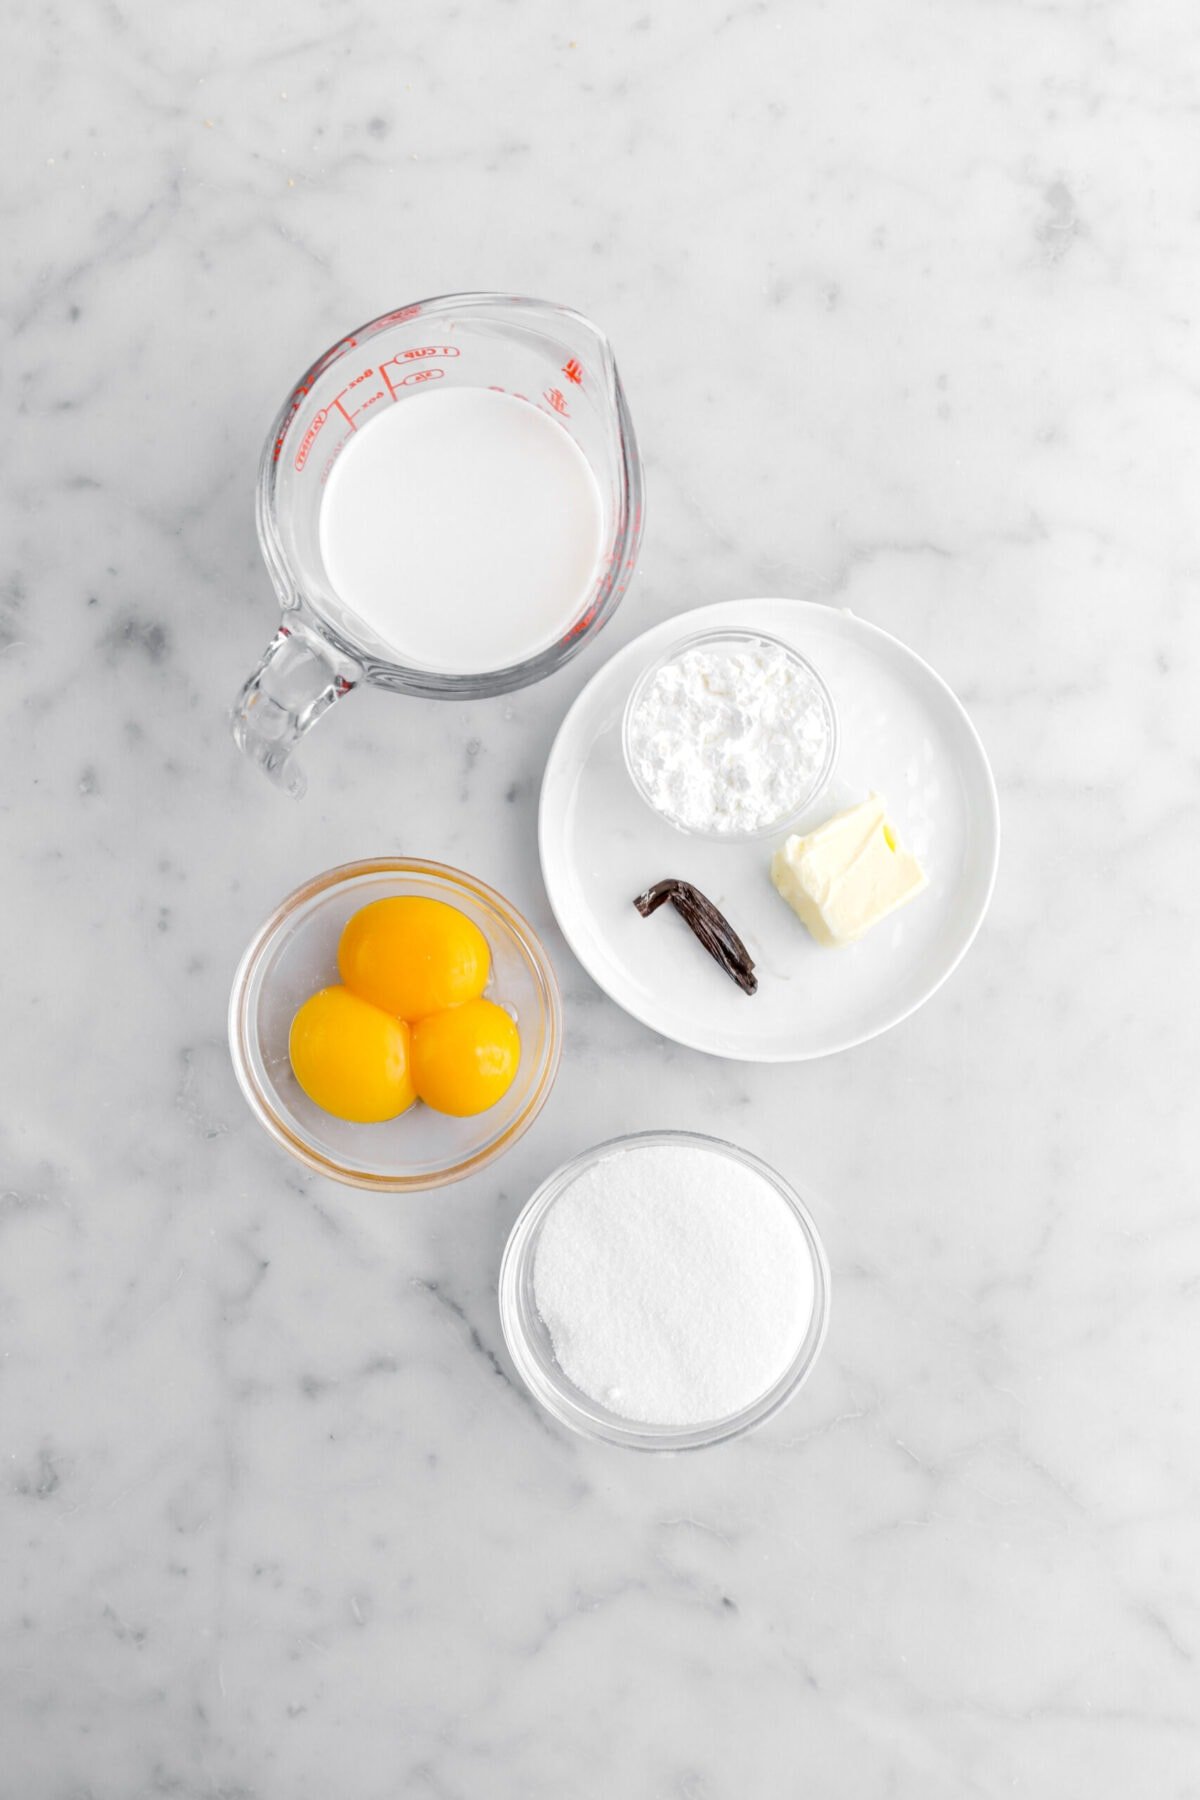 milk, corn starch, butter, vanilla bean, eggs, and sugar on marble surface.